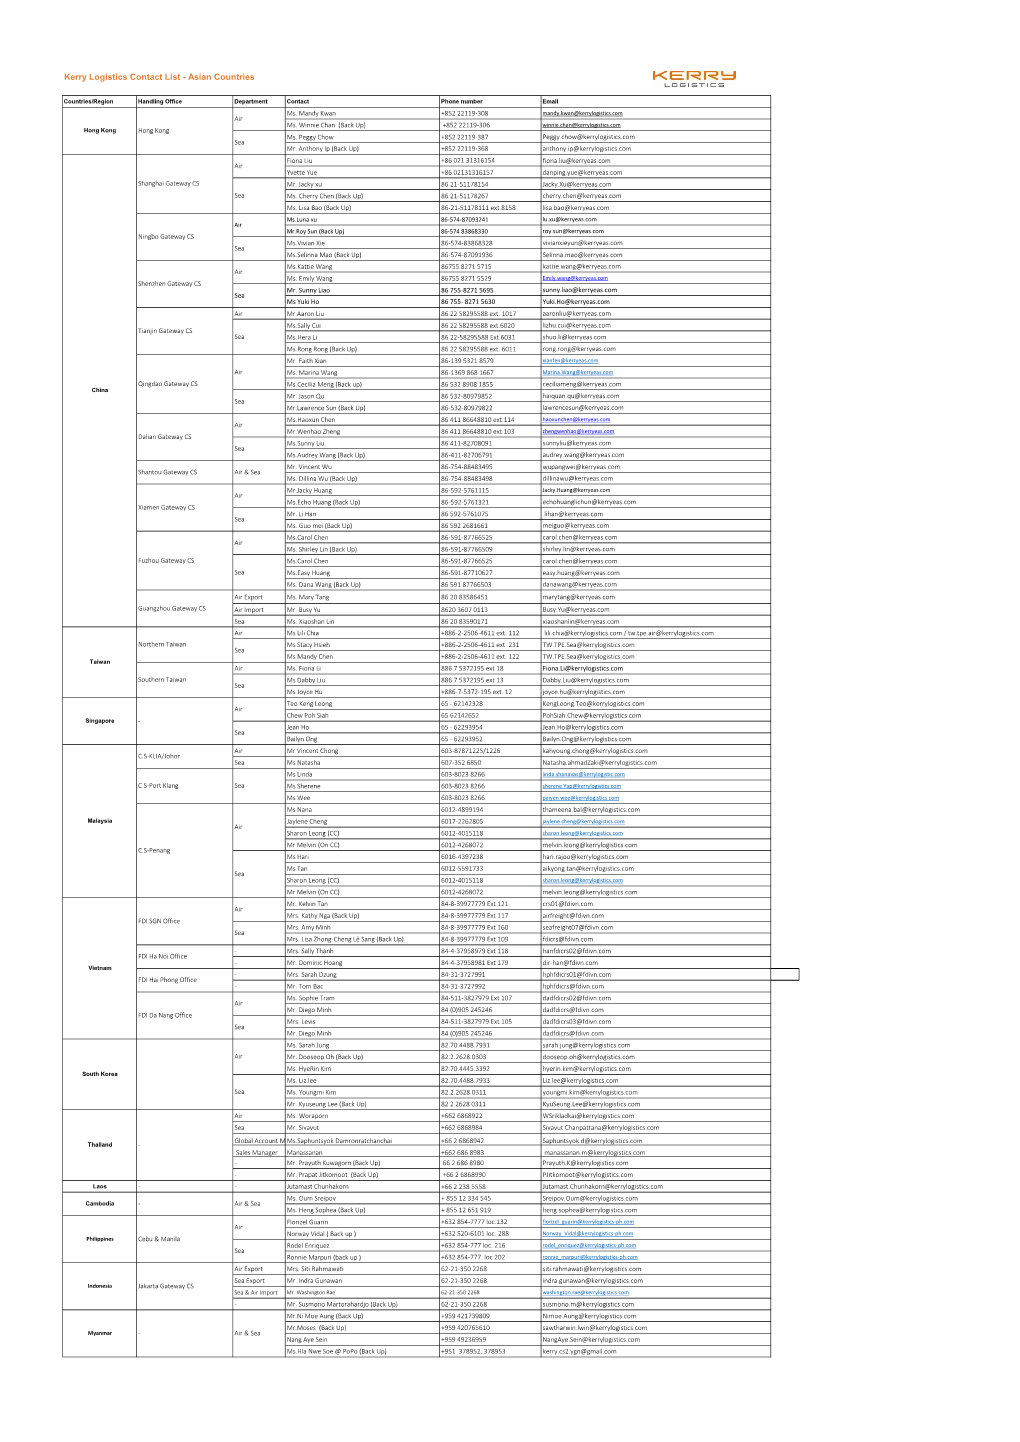 Kerry Logistics Contact List - Asian Countries